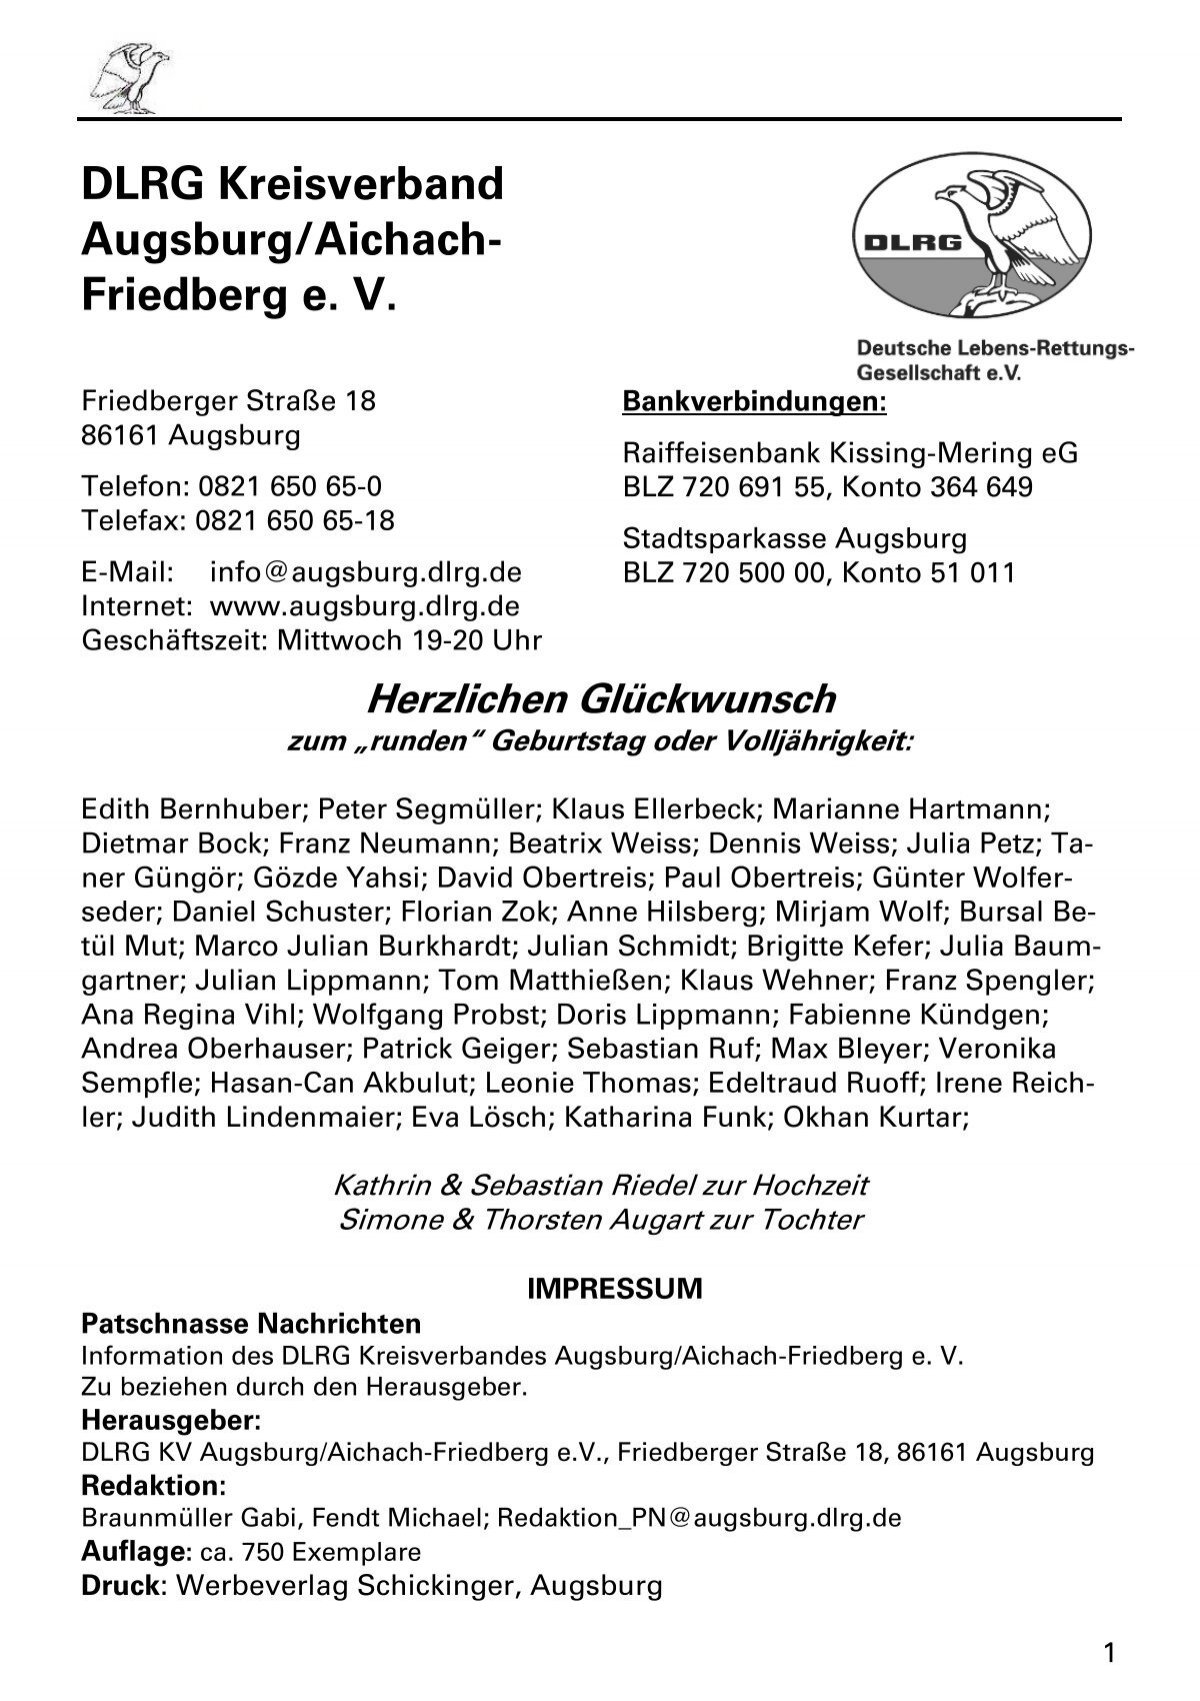 DLRG Kreisverband Augsburg/Aichach- Friedberg e. V.